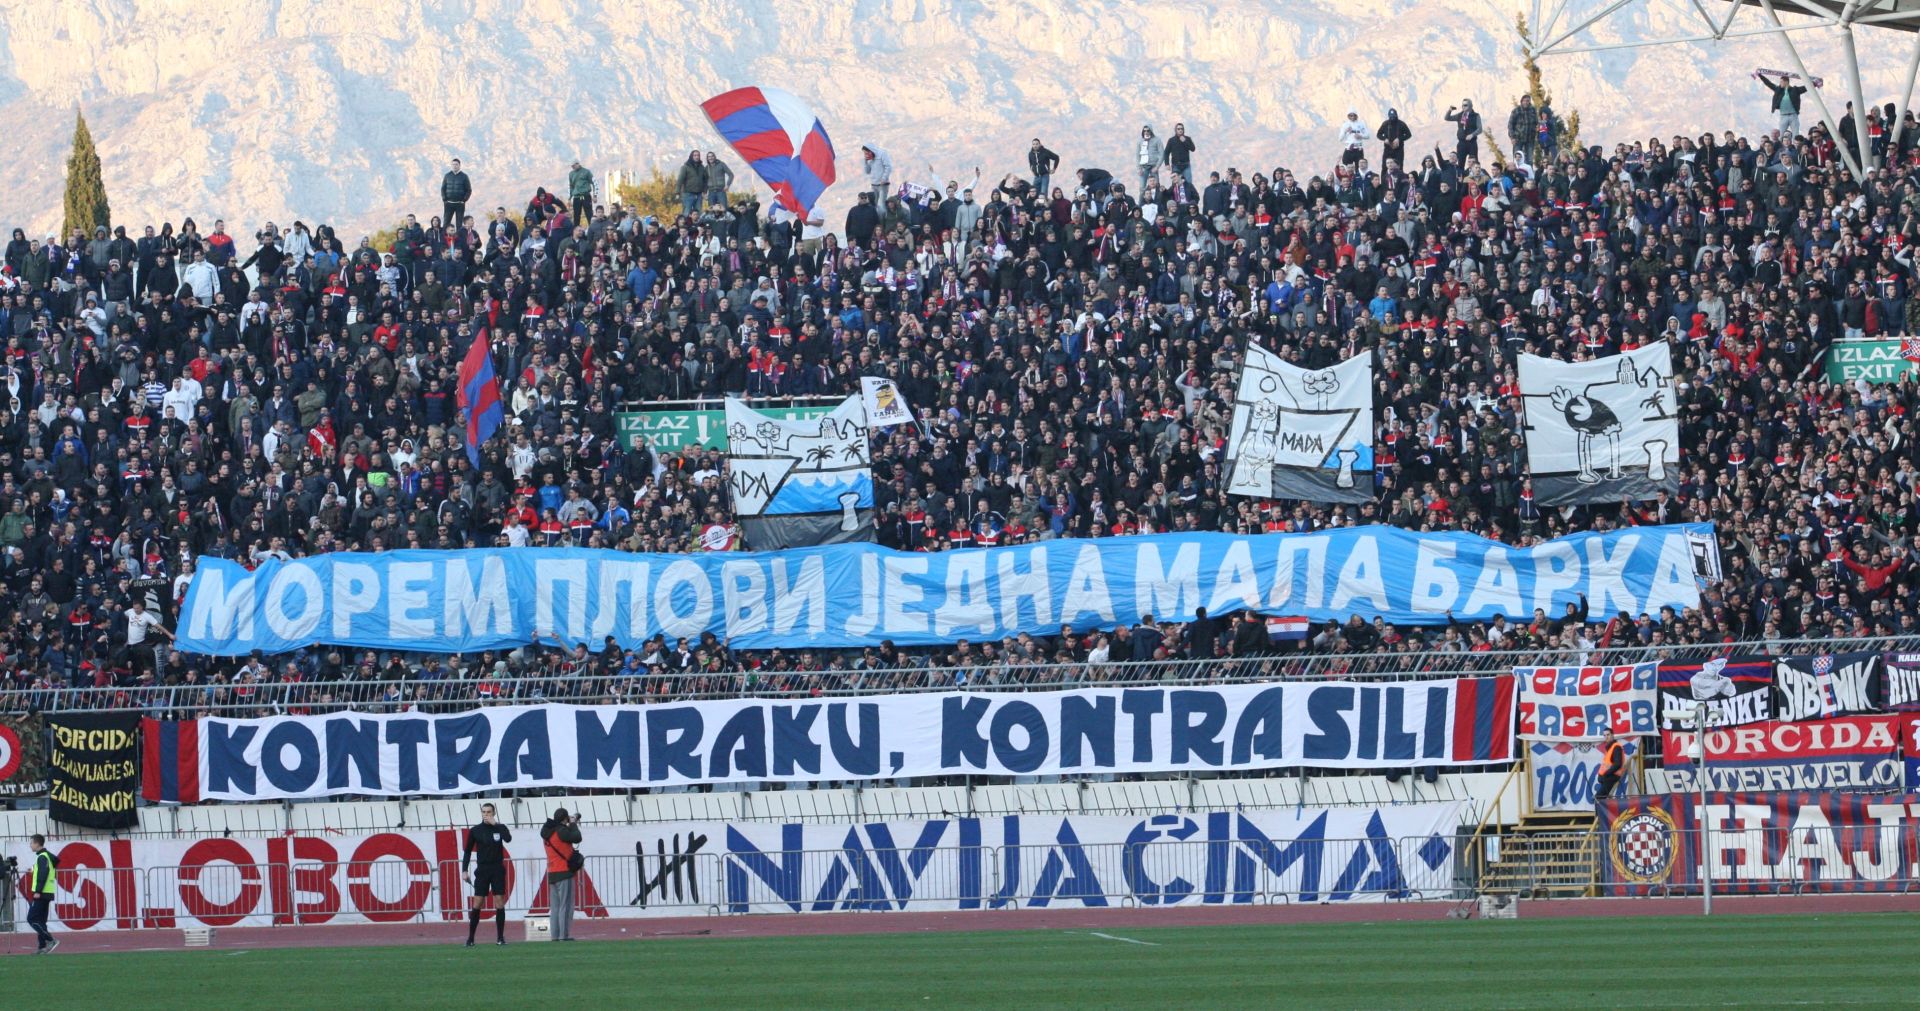 11.03.2017., Split - Utakmica 24. Kola MAXtv Prve lige izmedju HNK Hajduk i HNK Rijeka.
Photo: Ivo Cagalj/PIXSELL